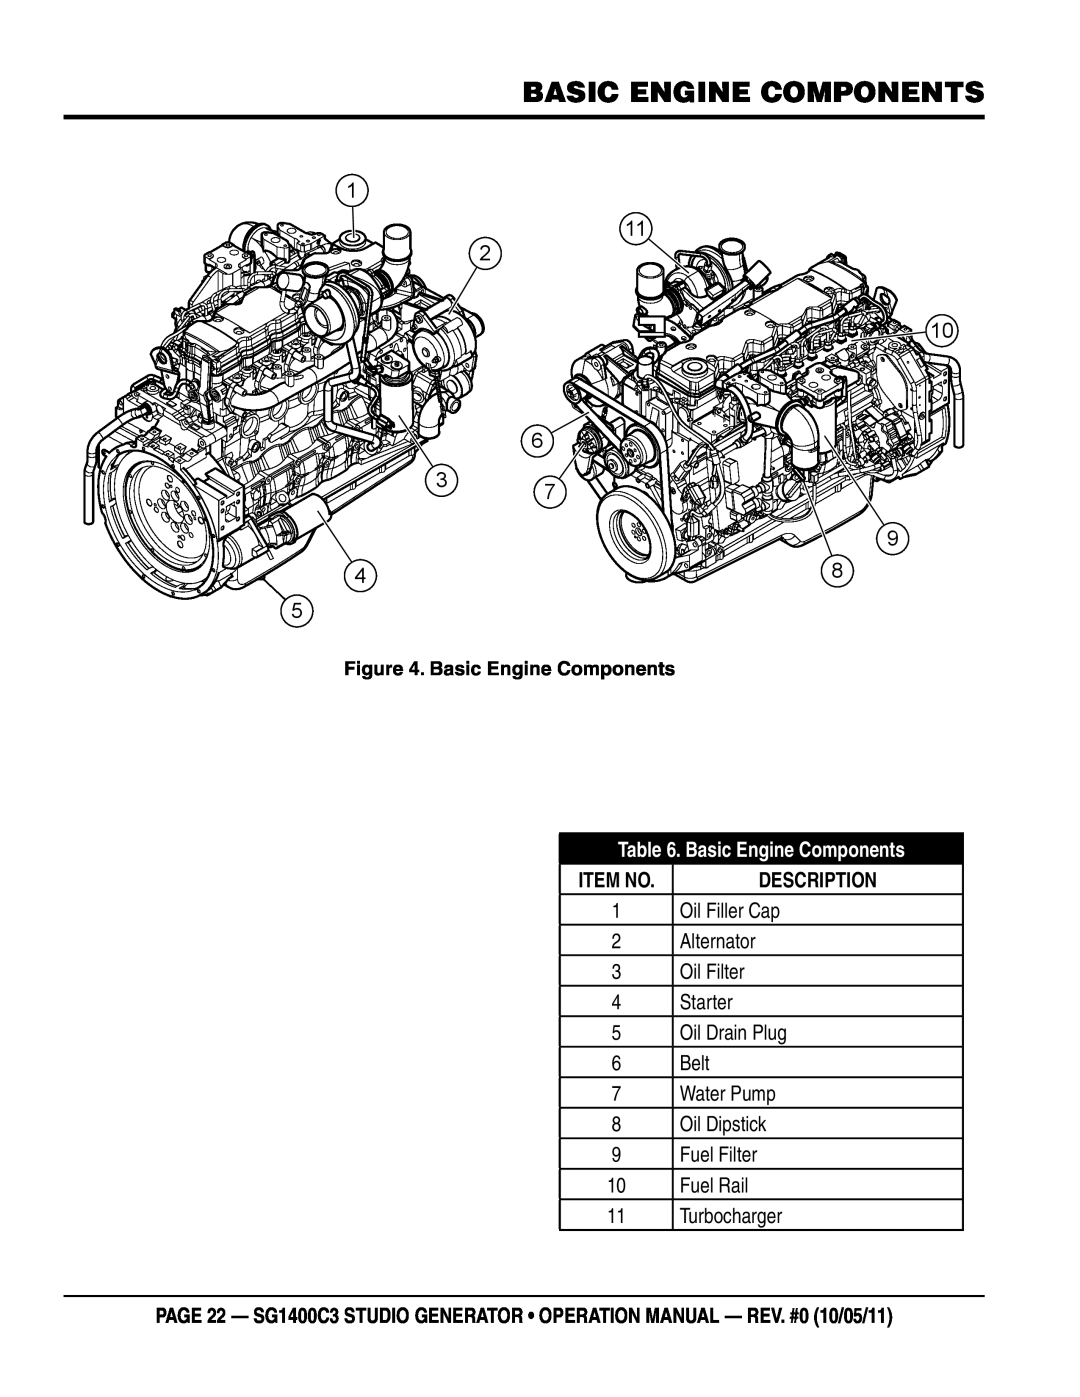 Multiquip SG1400C3 operation manual Basic Engine Components, Description 